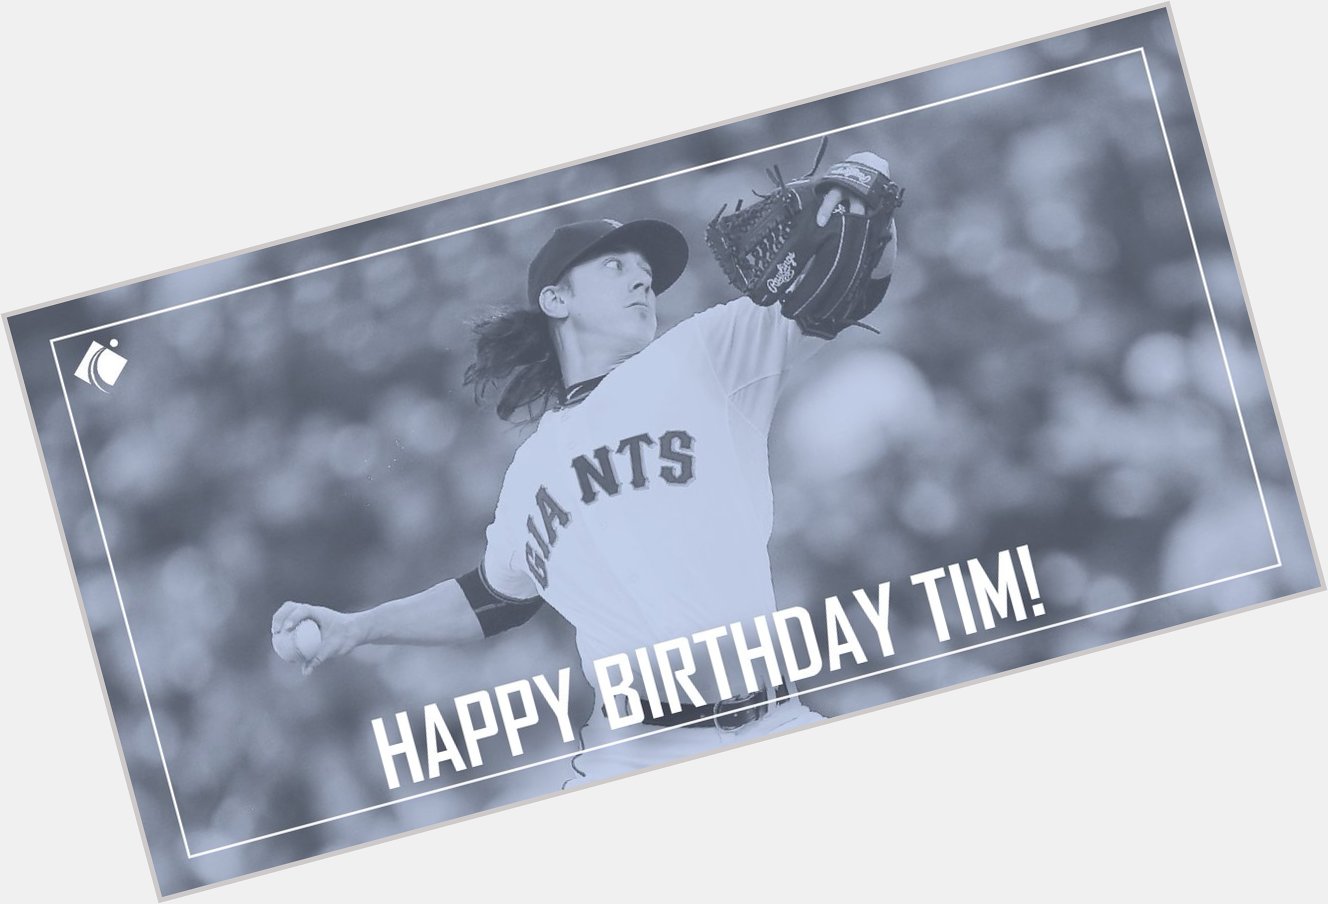 Happy Birthday Tim Lincecum! 